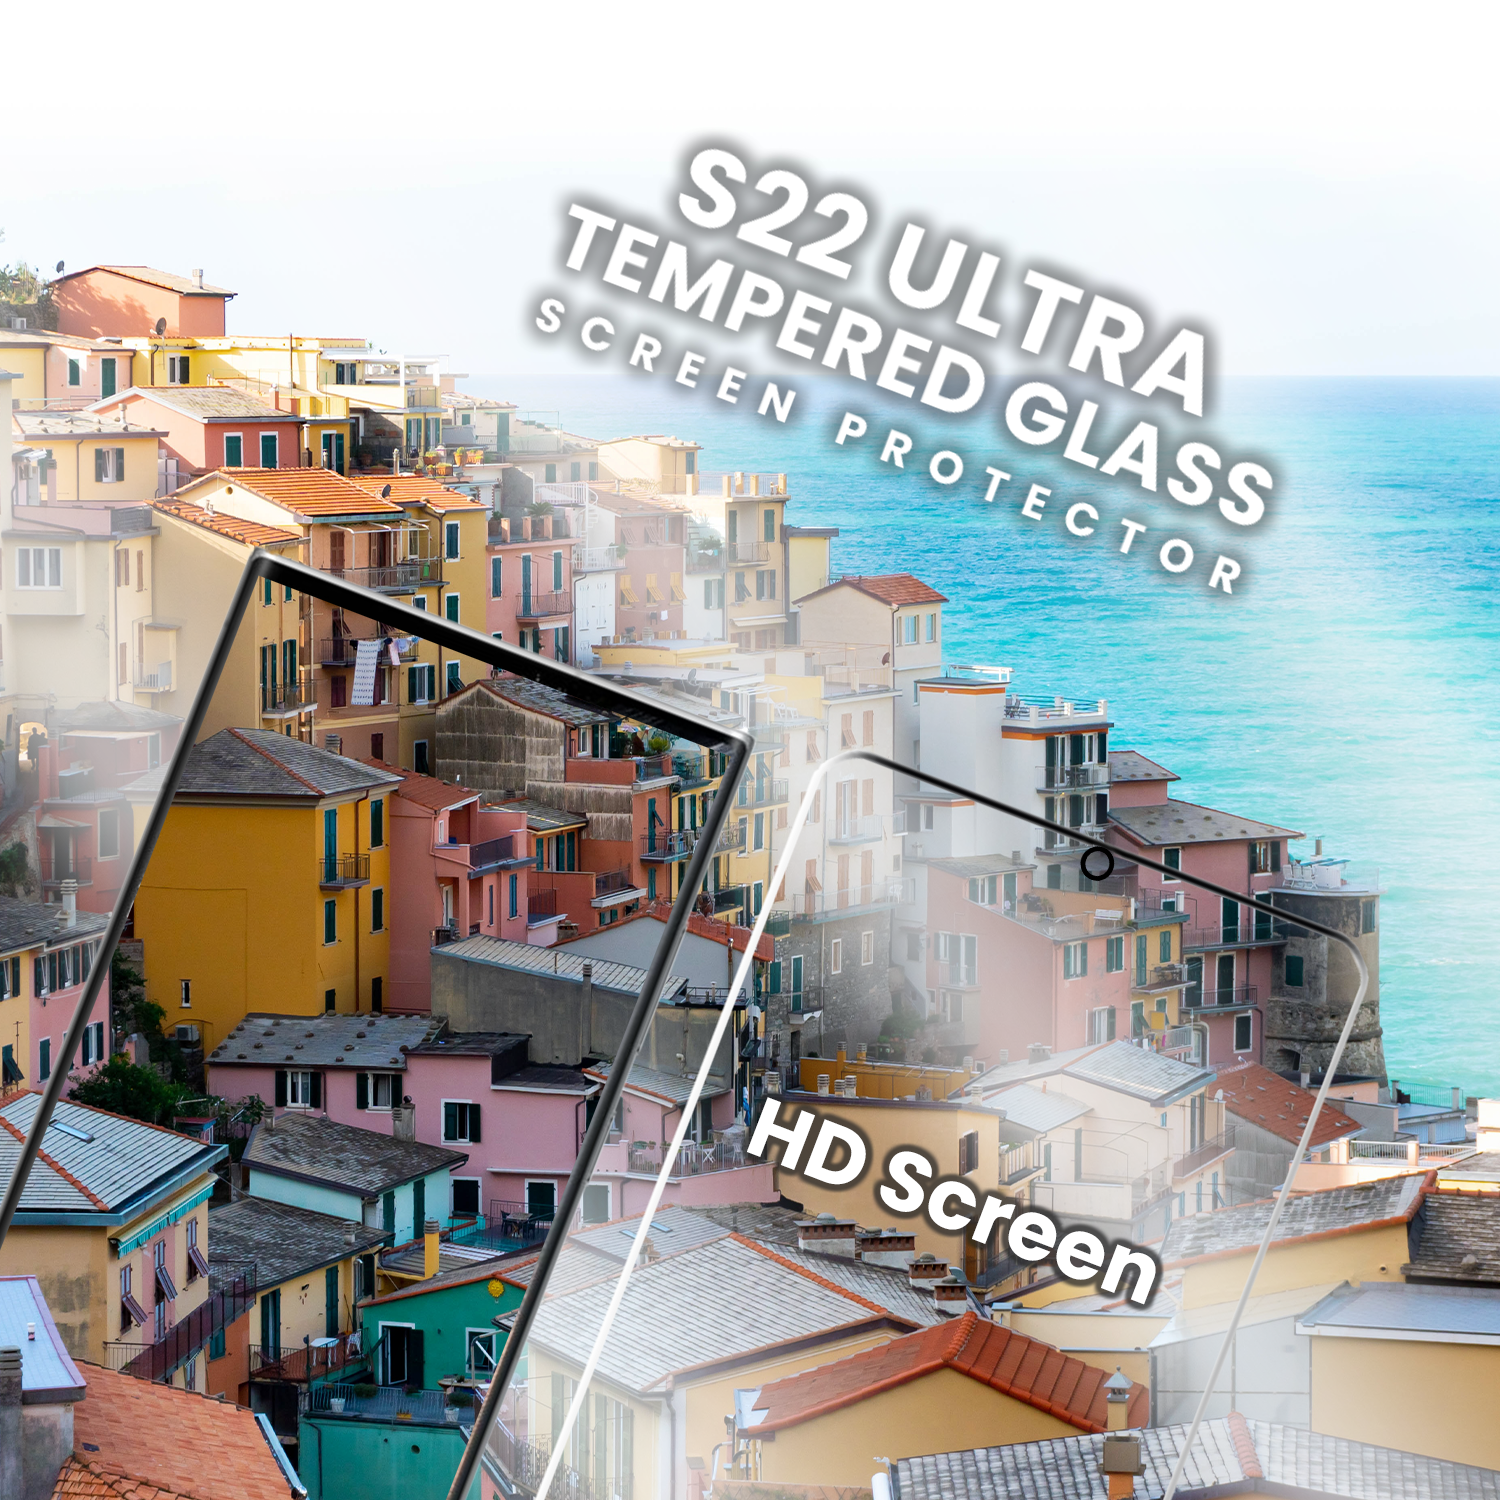 Samsung S22 ULTRA - 9H Härdat Glass - 3D Super Kvalitet